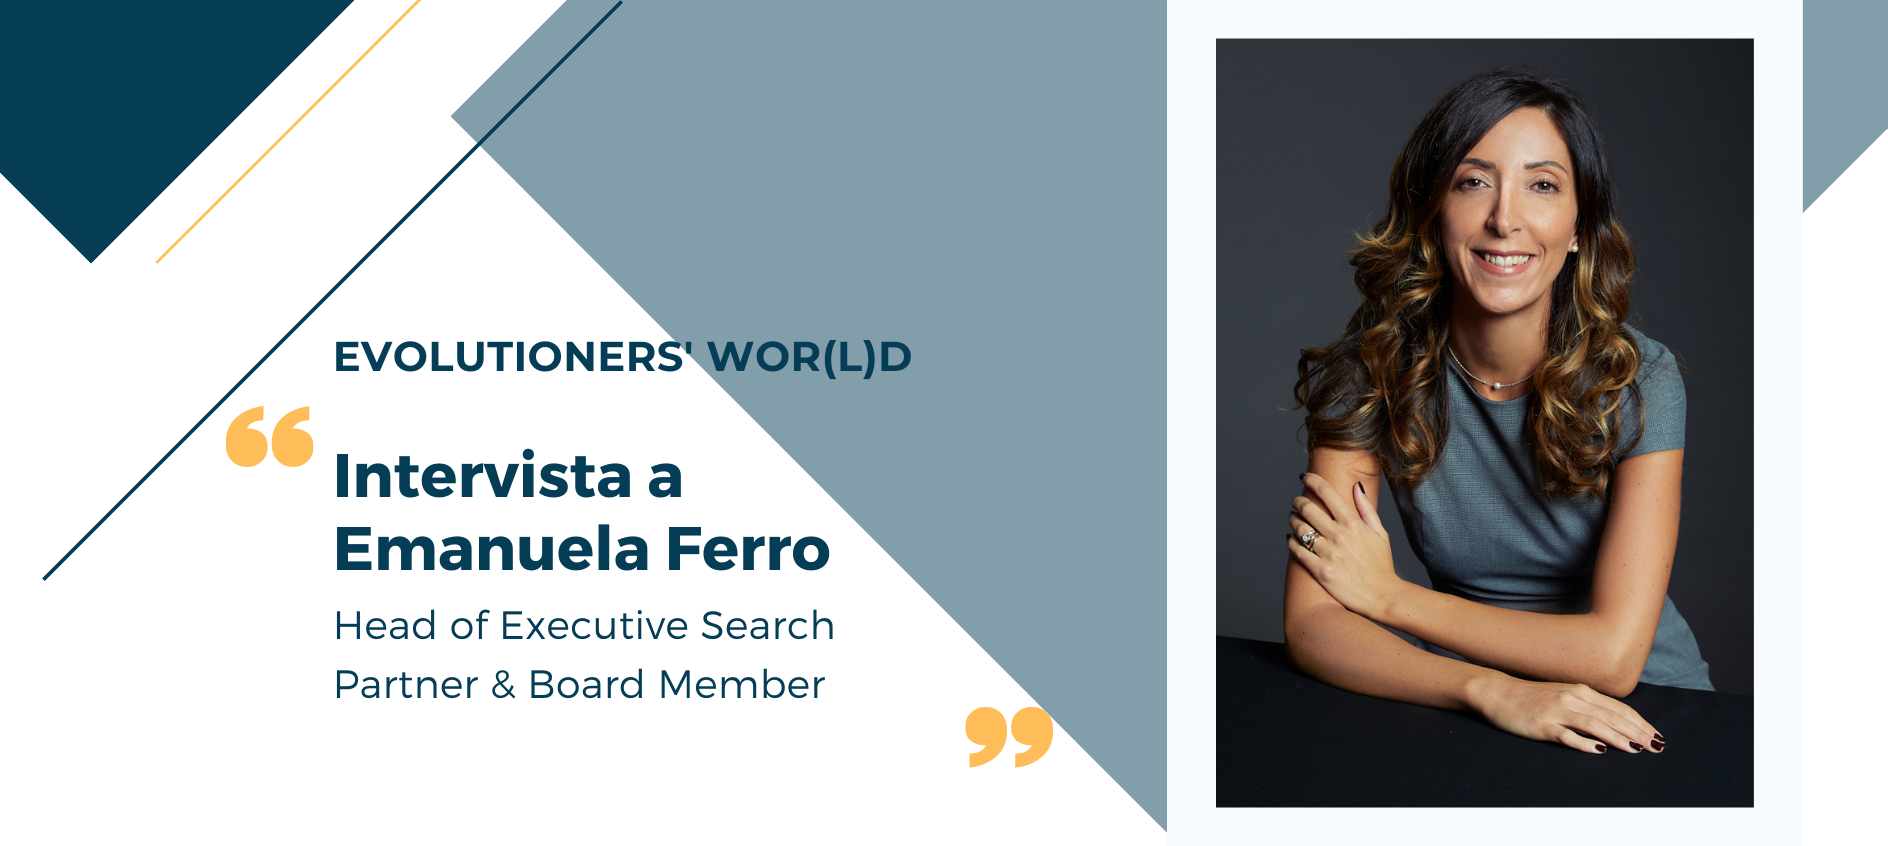 Evolutioners' world Emanuela Ferro Head of Executive Search